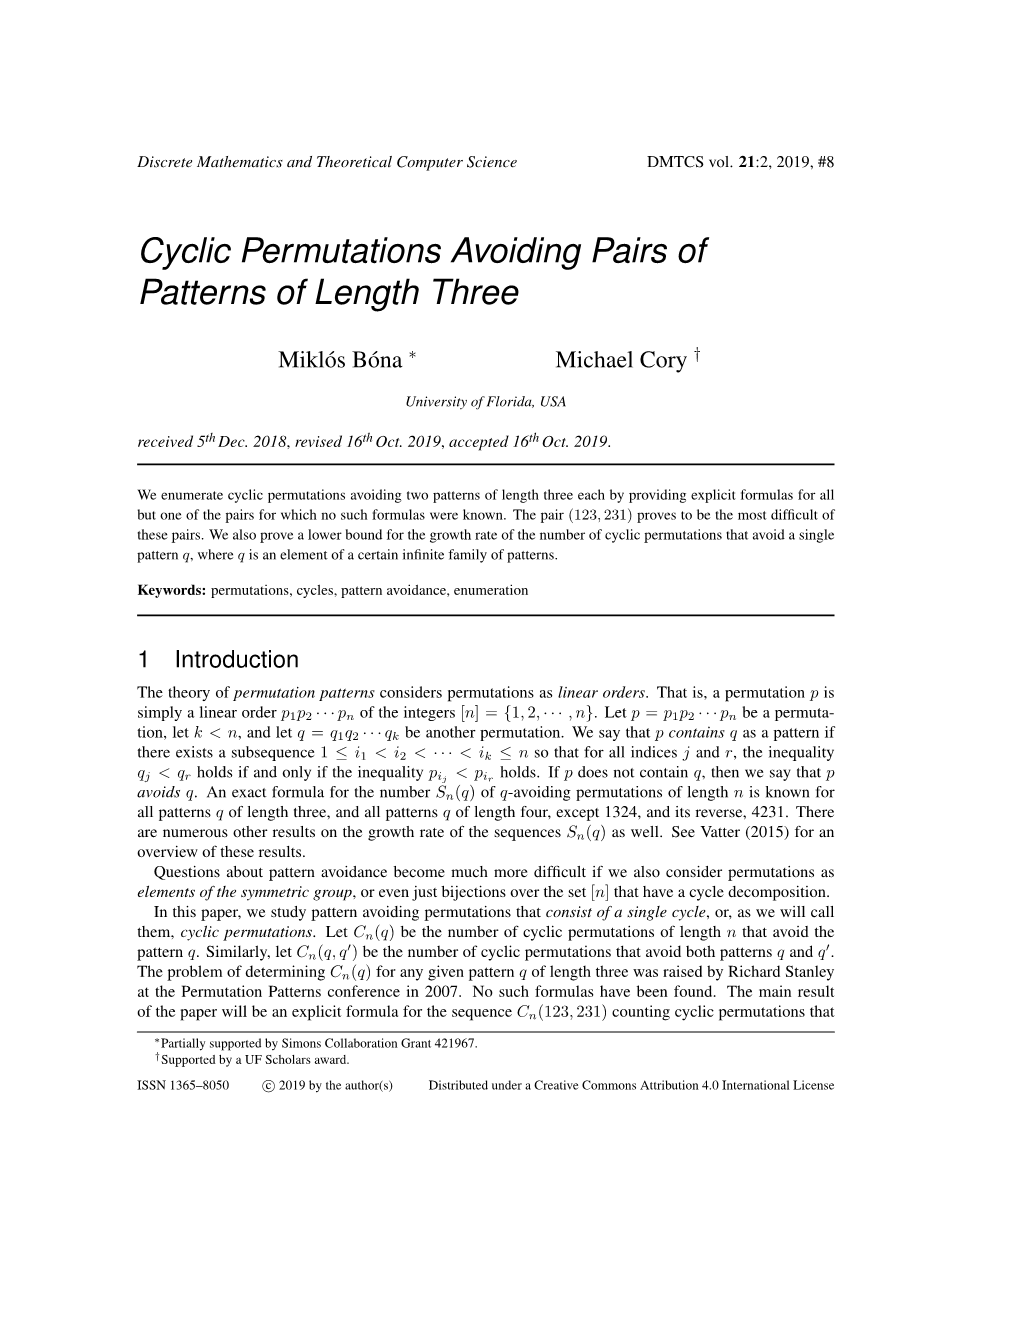 Cyclic Permutations Avoiding Pairs of Patterns of Length Three